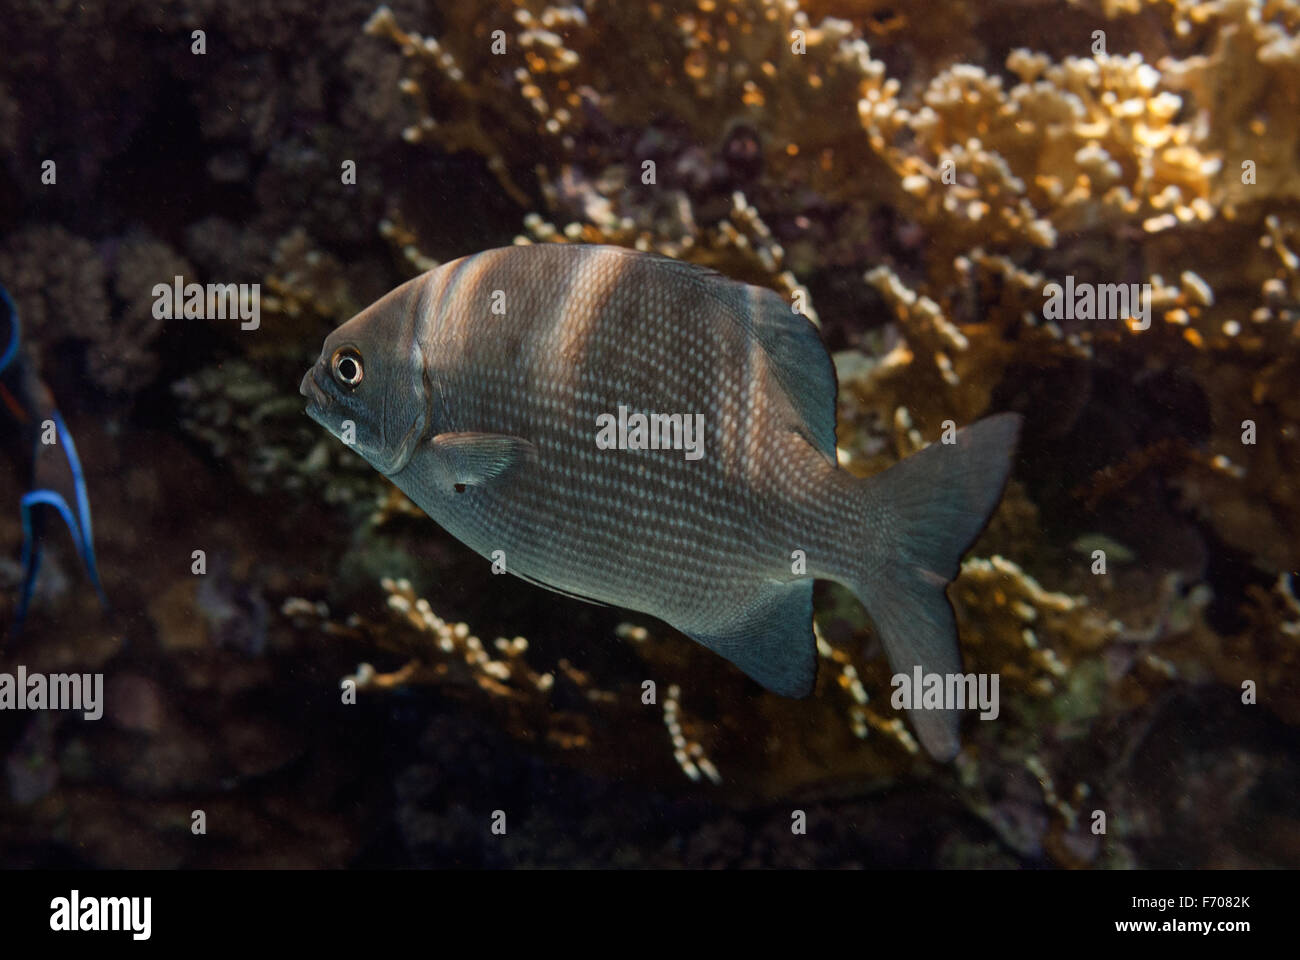 Snubnose rudderfish, Kyphosus cinerascens, Kyphosidae, Sharm el Sheikh, Red Sea, Egypt Stock Photo